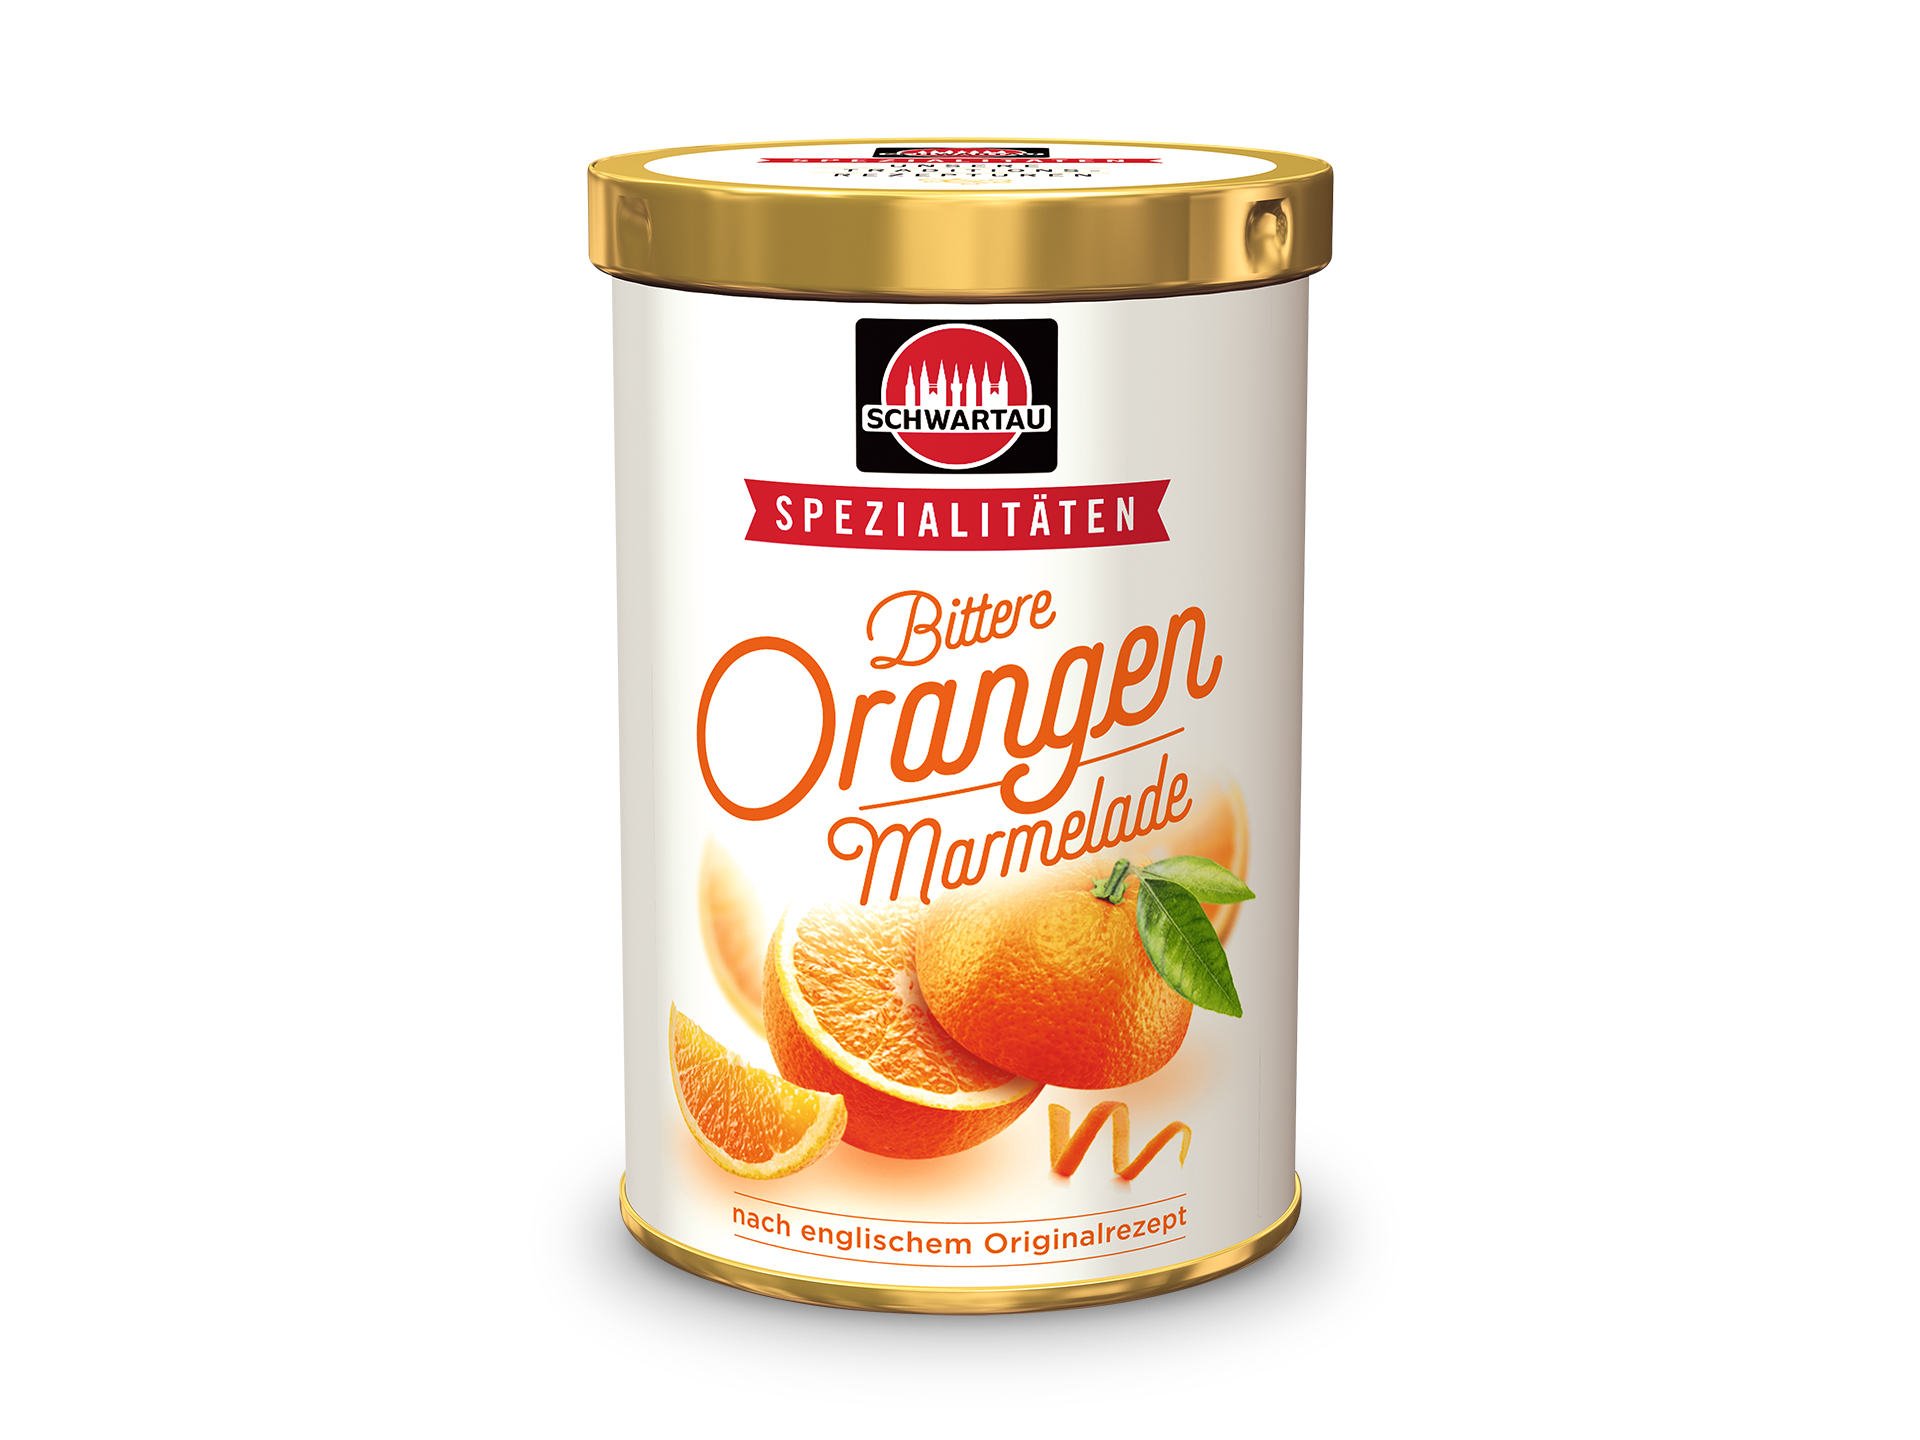 Spezialitäten Bittere Orange